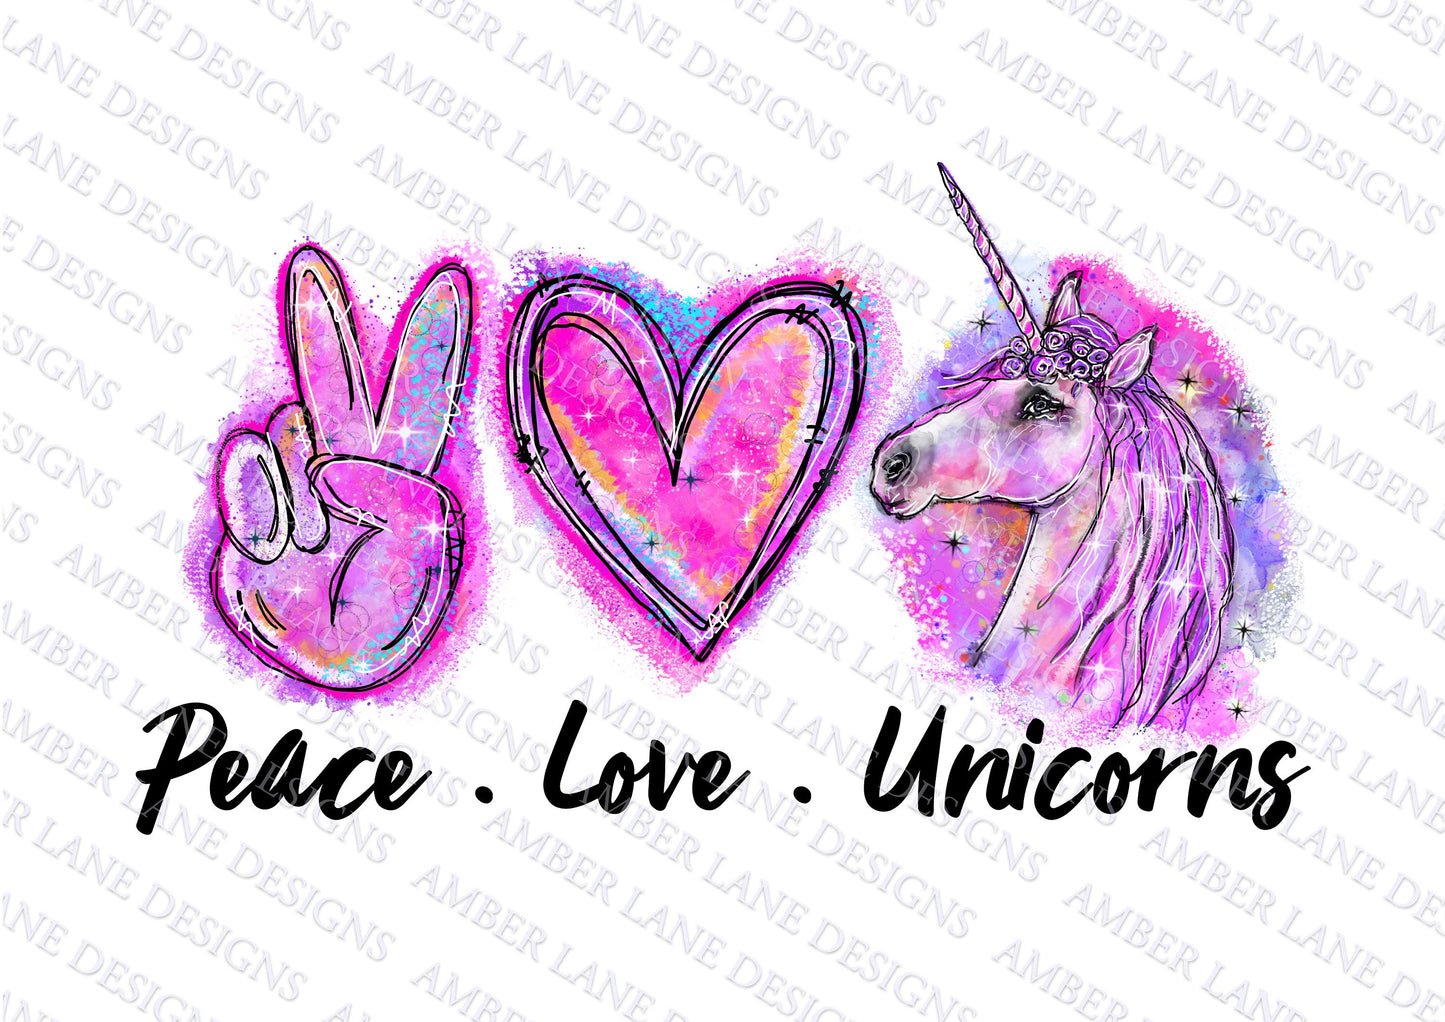 Peace Love Unicorns PNG |Unicorn Graphics| Unicorn Sublimation | Watercolor Unicorn PNG